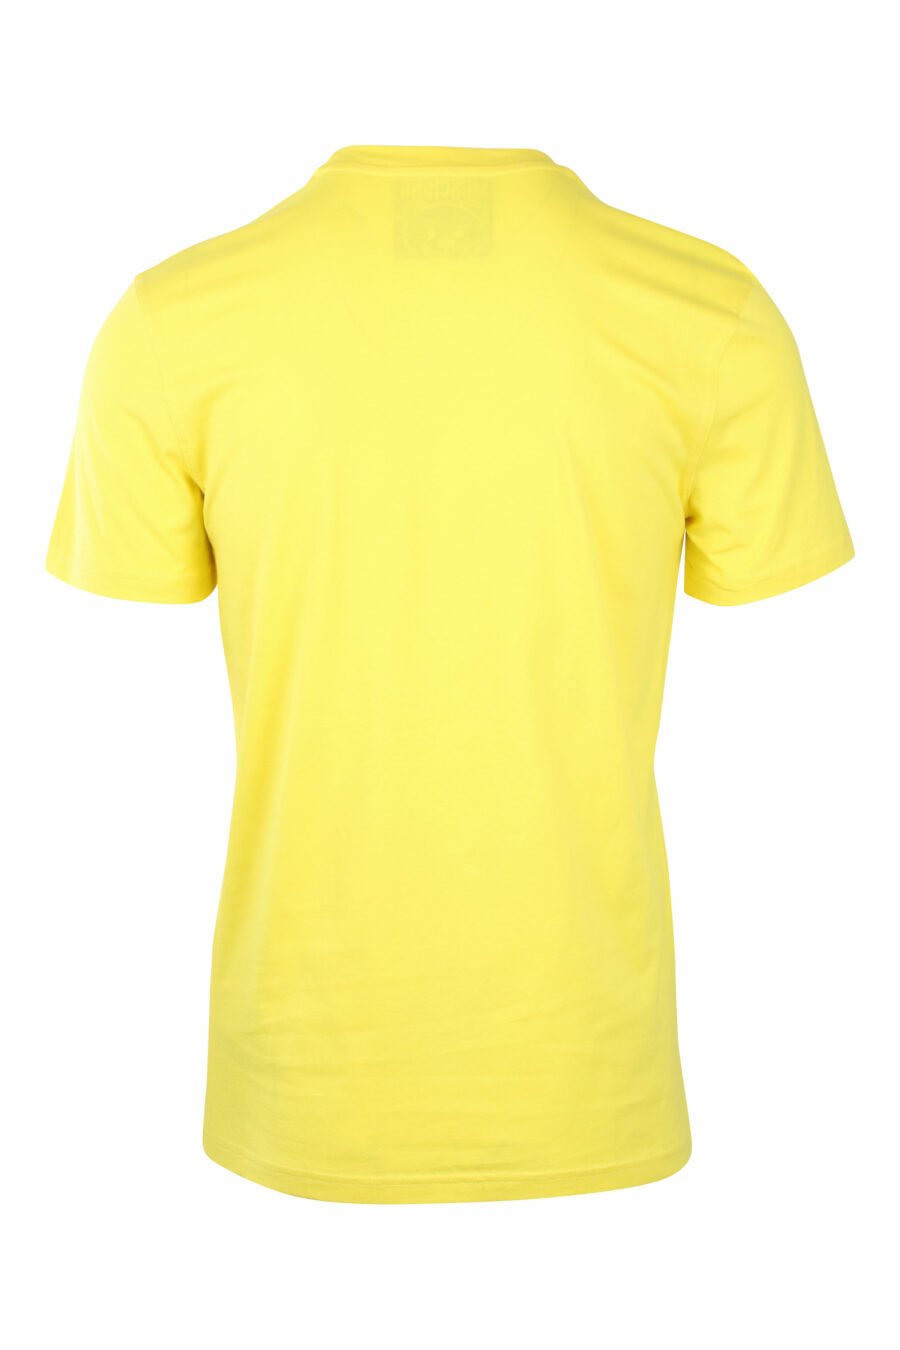 Camiseta amarilla con minilogo oso monocromático - IMG 1409